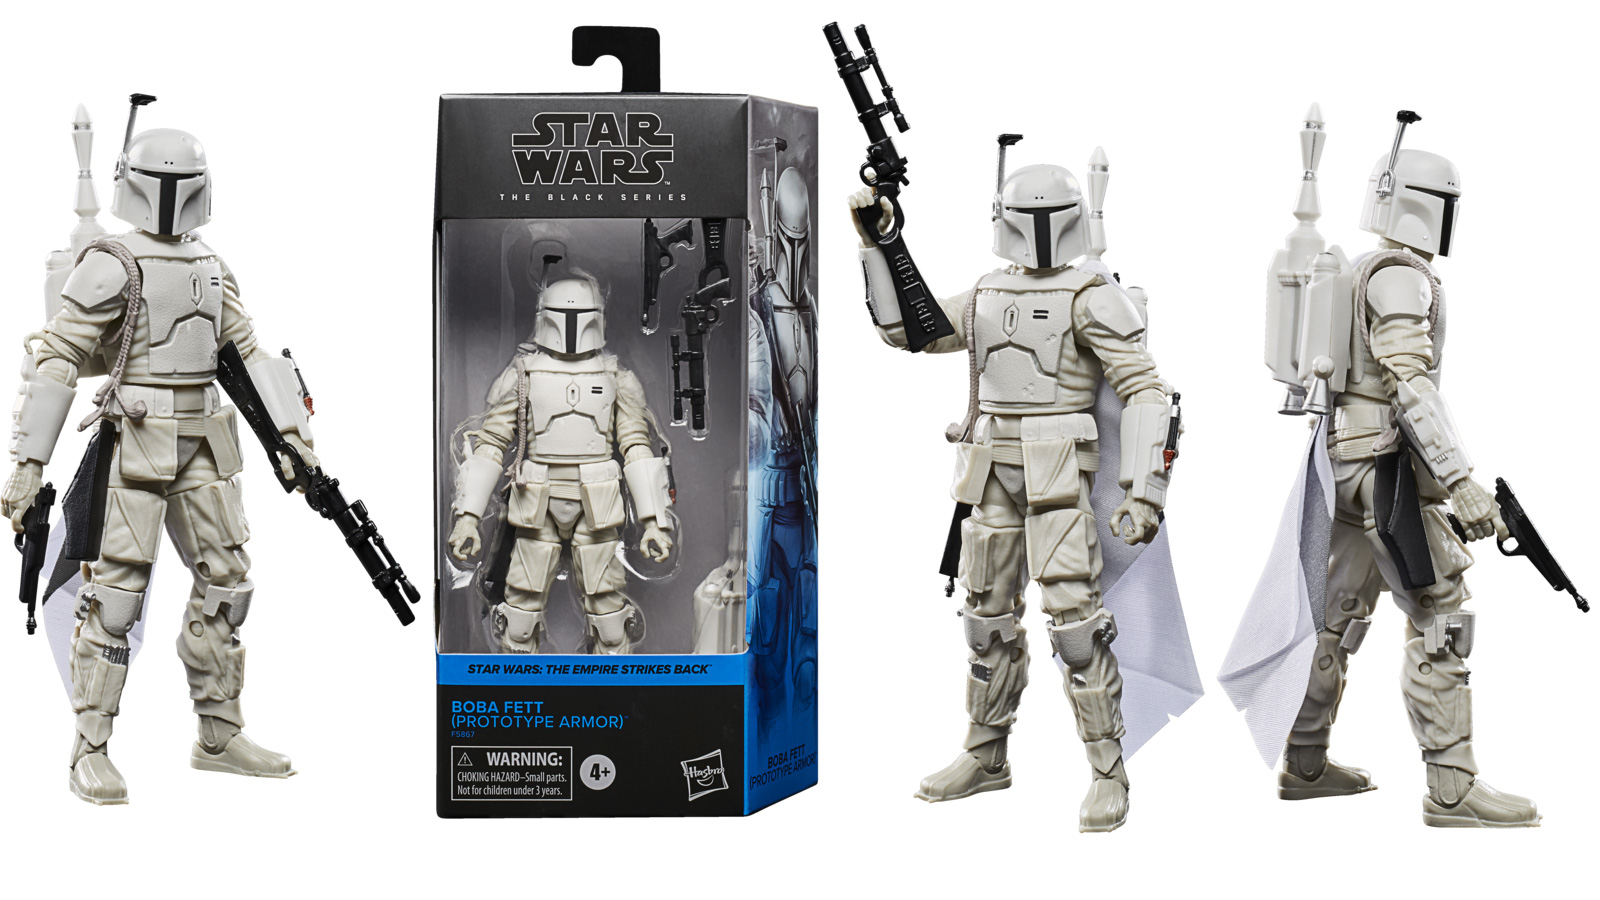 Hasbro Star Wars Black Series 6 inch Boba Fett Prototype Armor Action Figure for sale online 